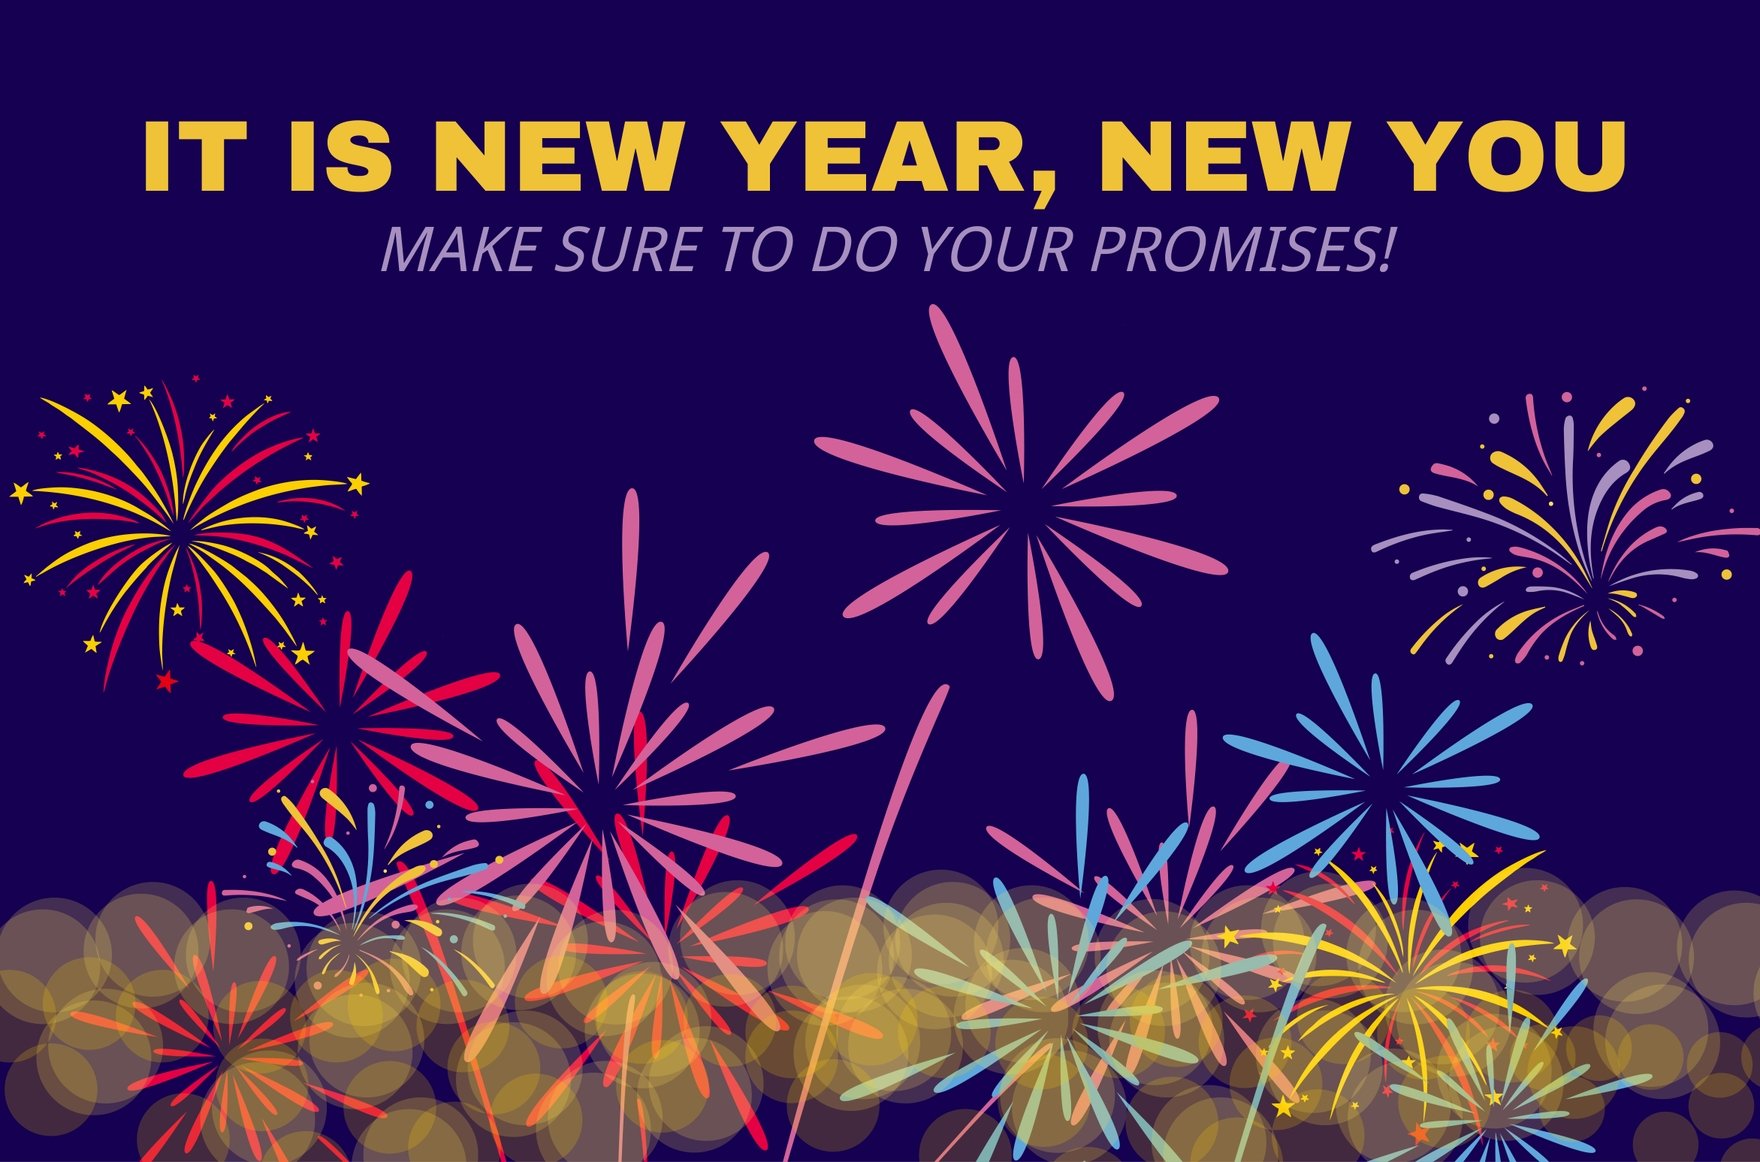 New Year's Eve Banner in Illustrator, EPS, SVG, JPG, PNG